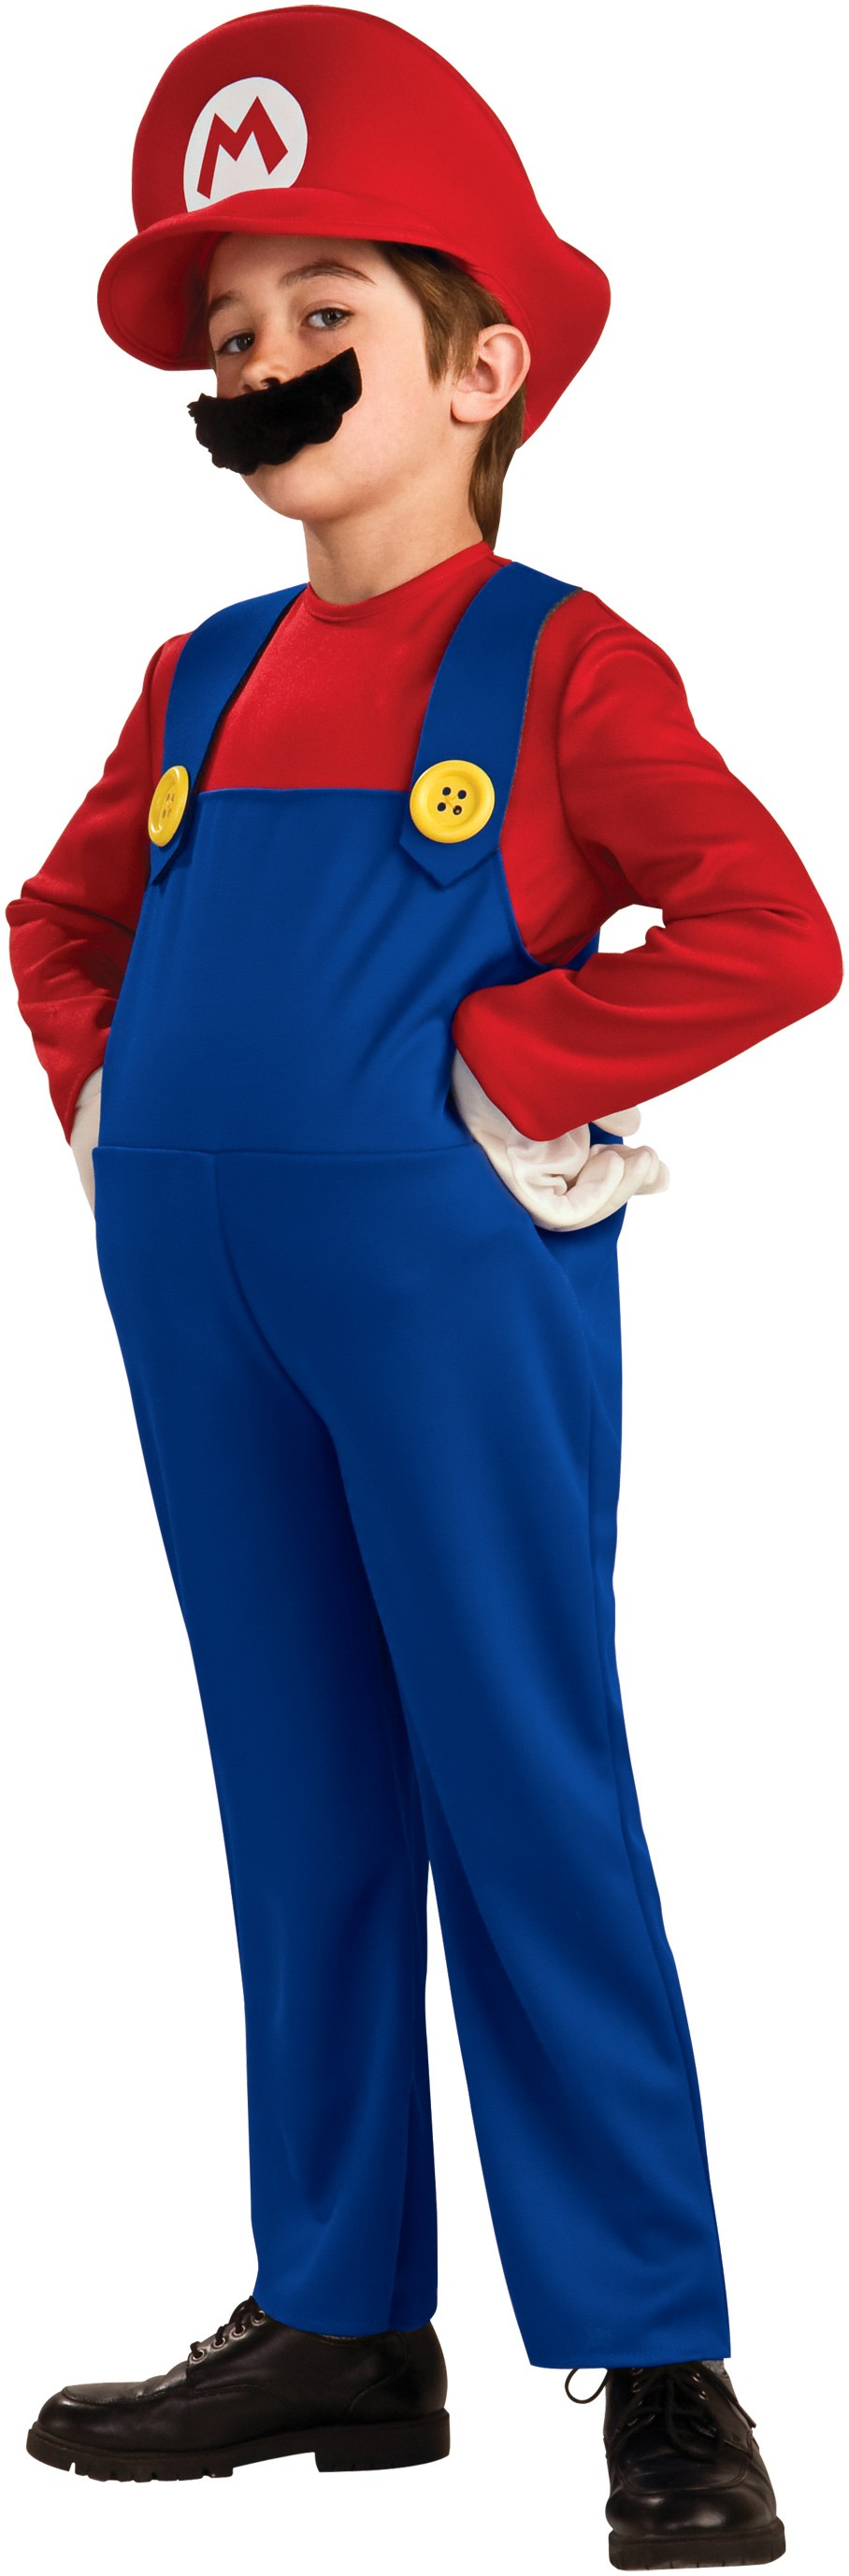 Super Mario Bros. Mario Deluxe Toddler Child Costume Rubies Costumes BSRU 65026 31 | Stay at Home Mum.com.au